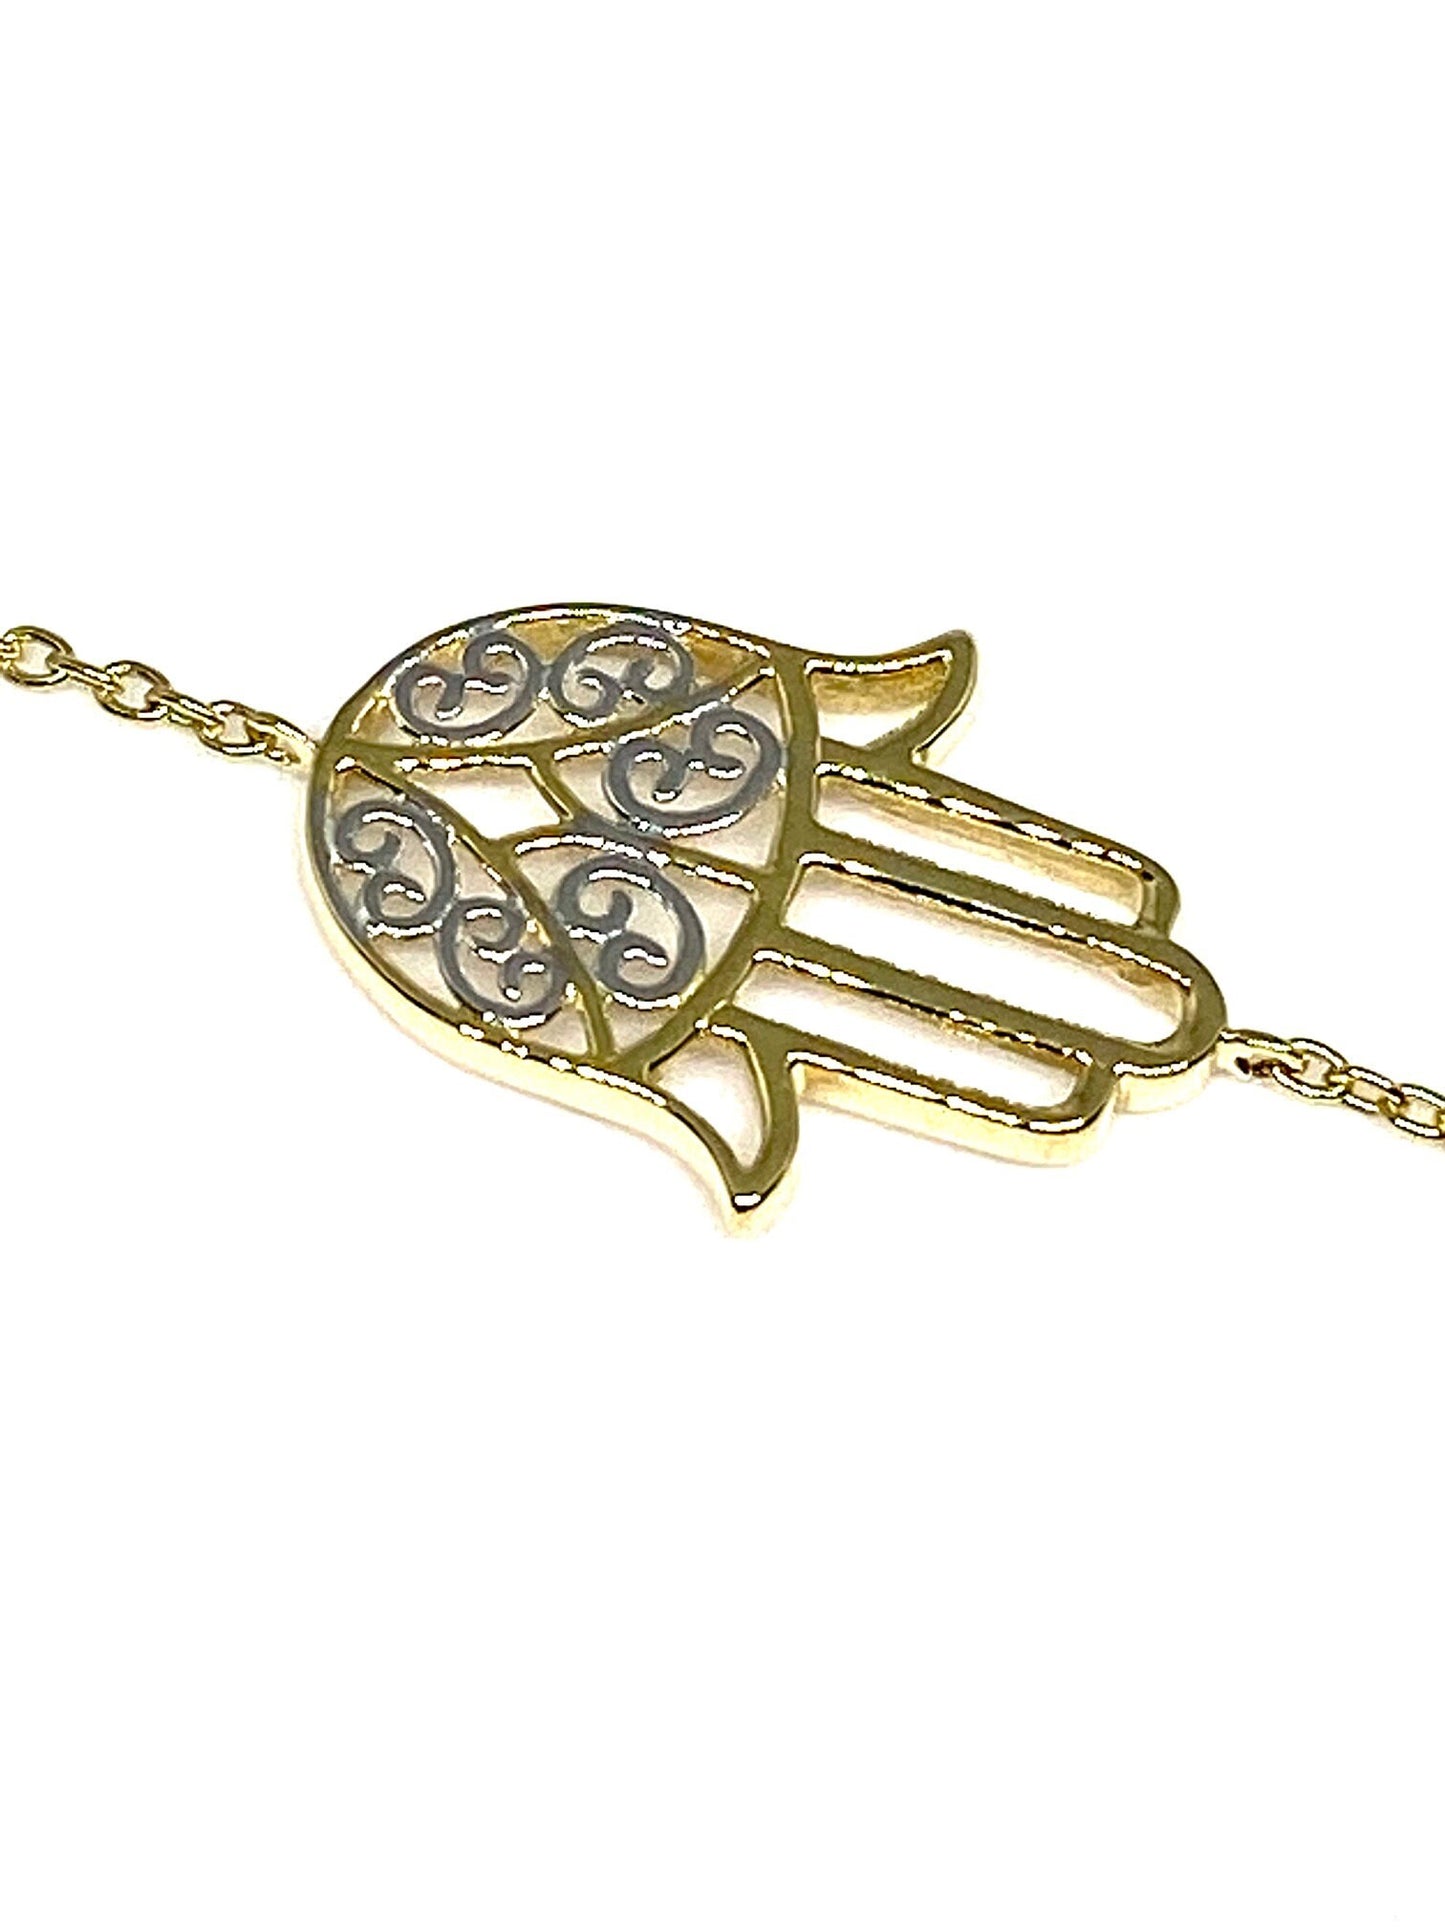 Two-Tone Gold Religious Filigree HAMSA Hand Chain Bracelet